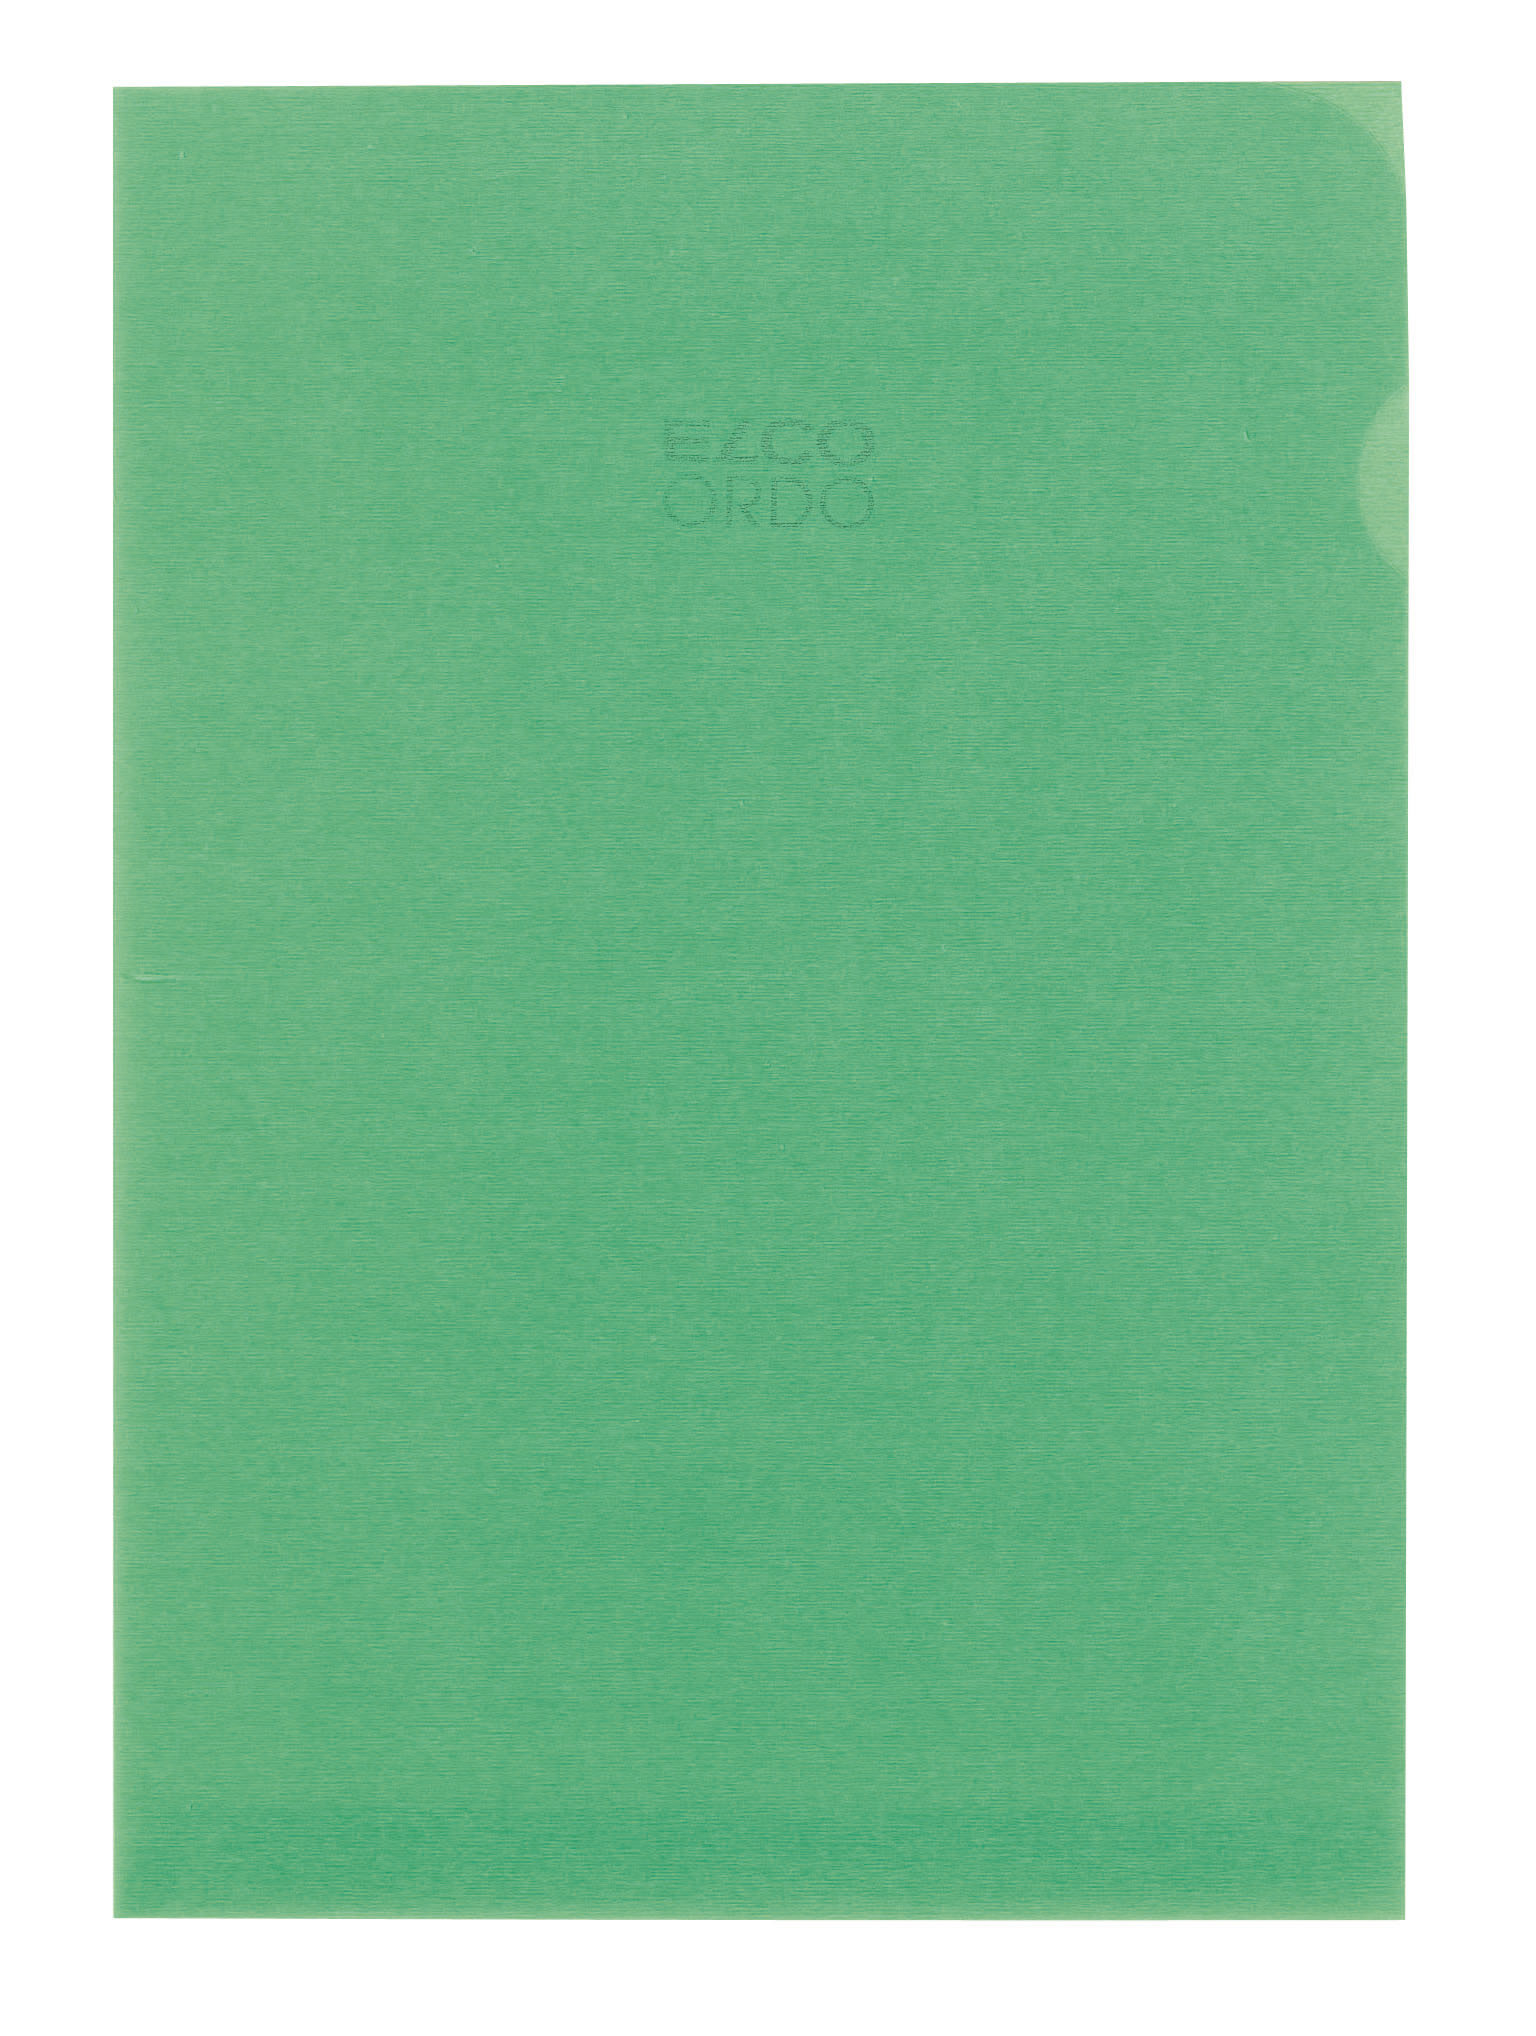 ELCO Dossier Ordo A4 29490.64 transparent, vert 100 pièces transparent, vert 100 pièces